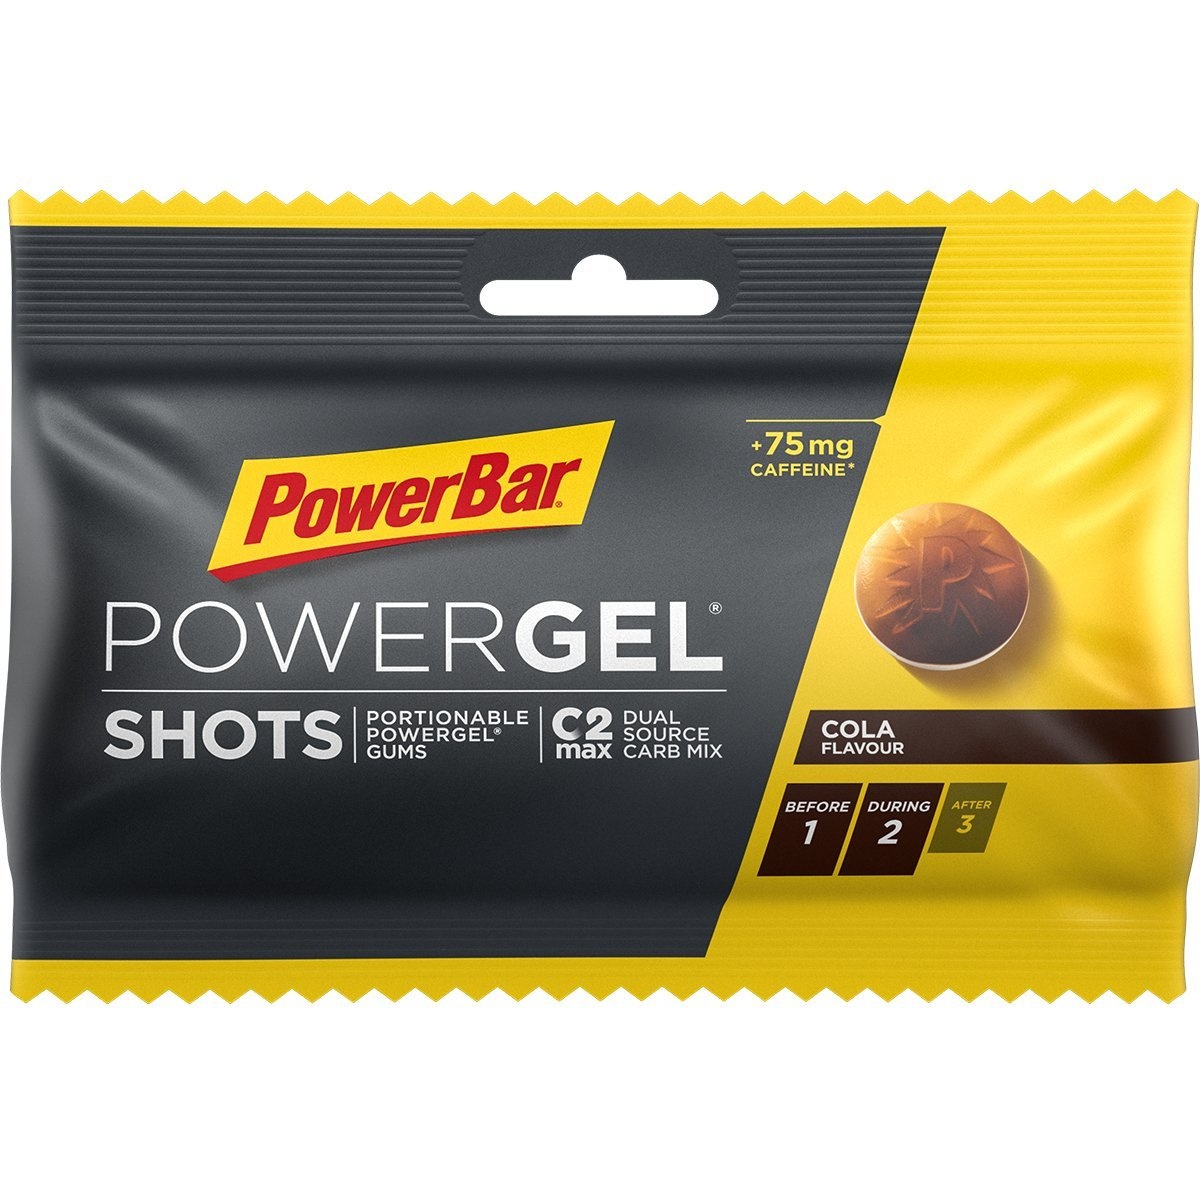 Tilbehør - Energiprodukter - Energigel - PowerBar PowerGel shots - Vingummi - Cola